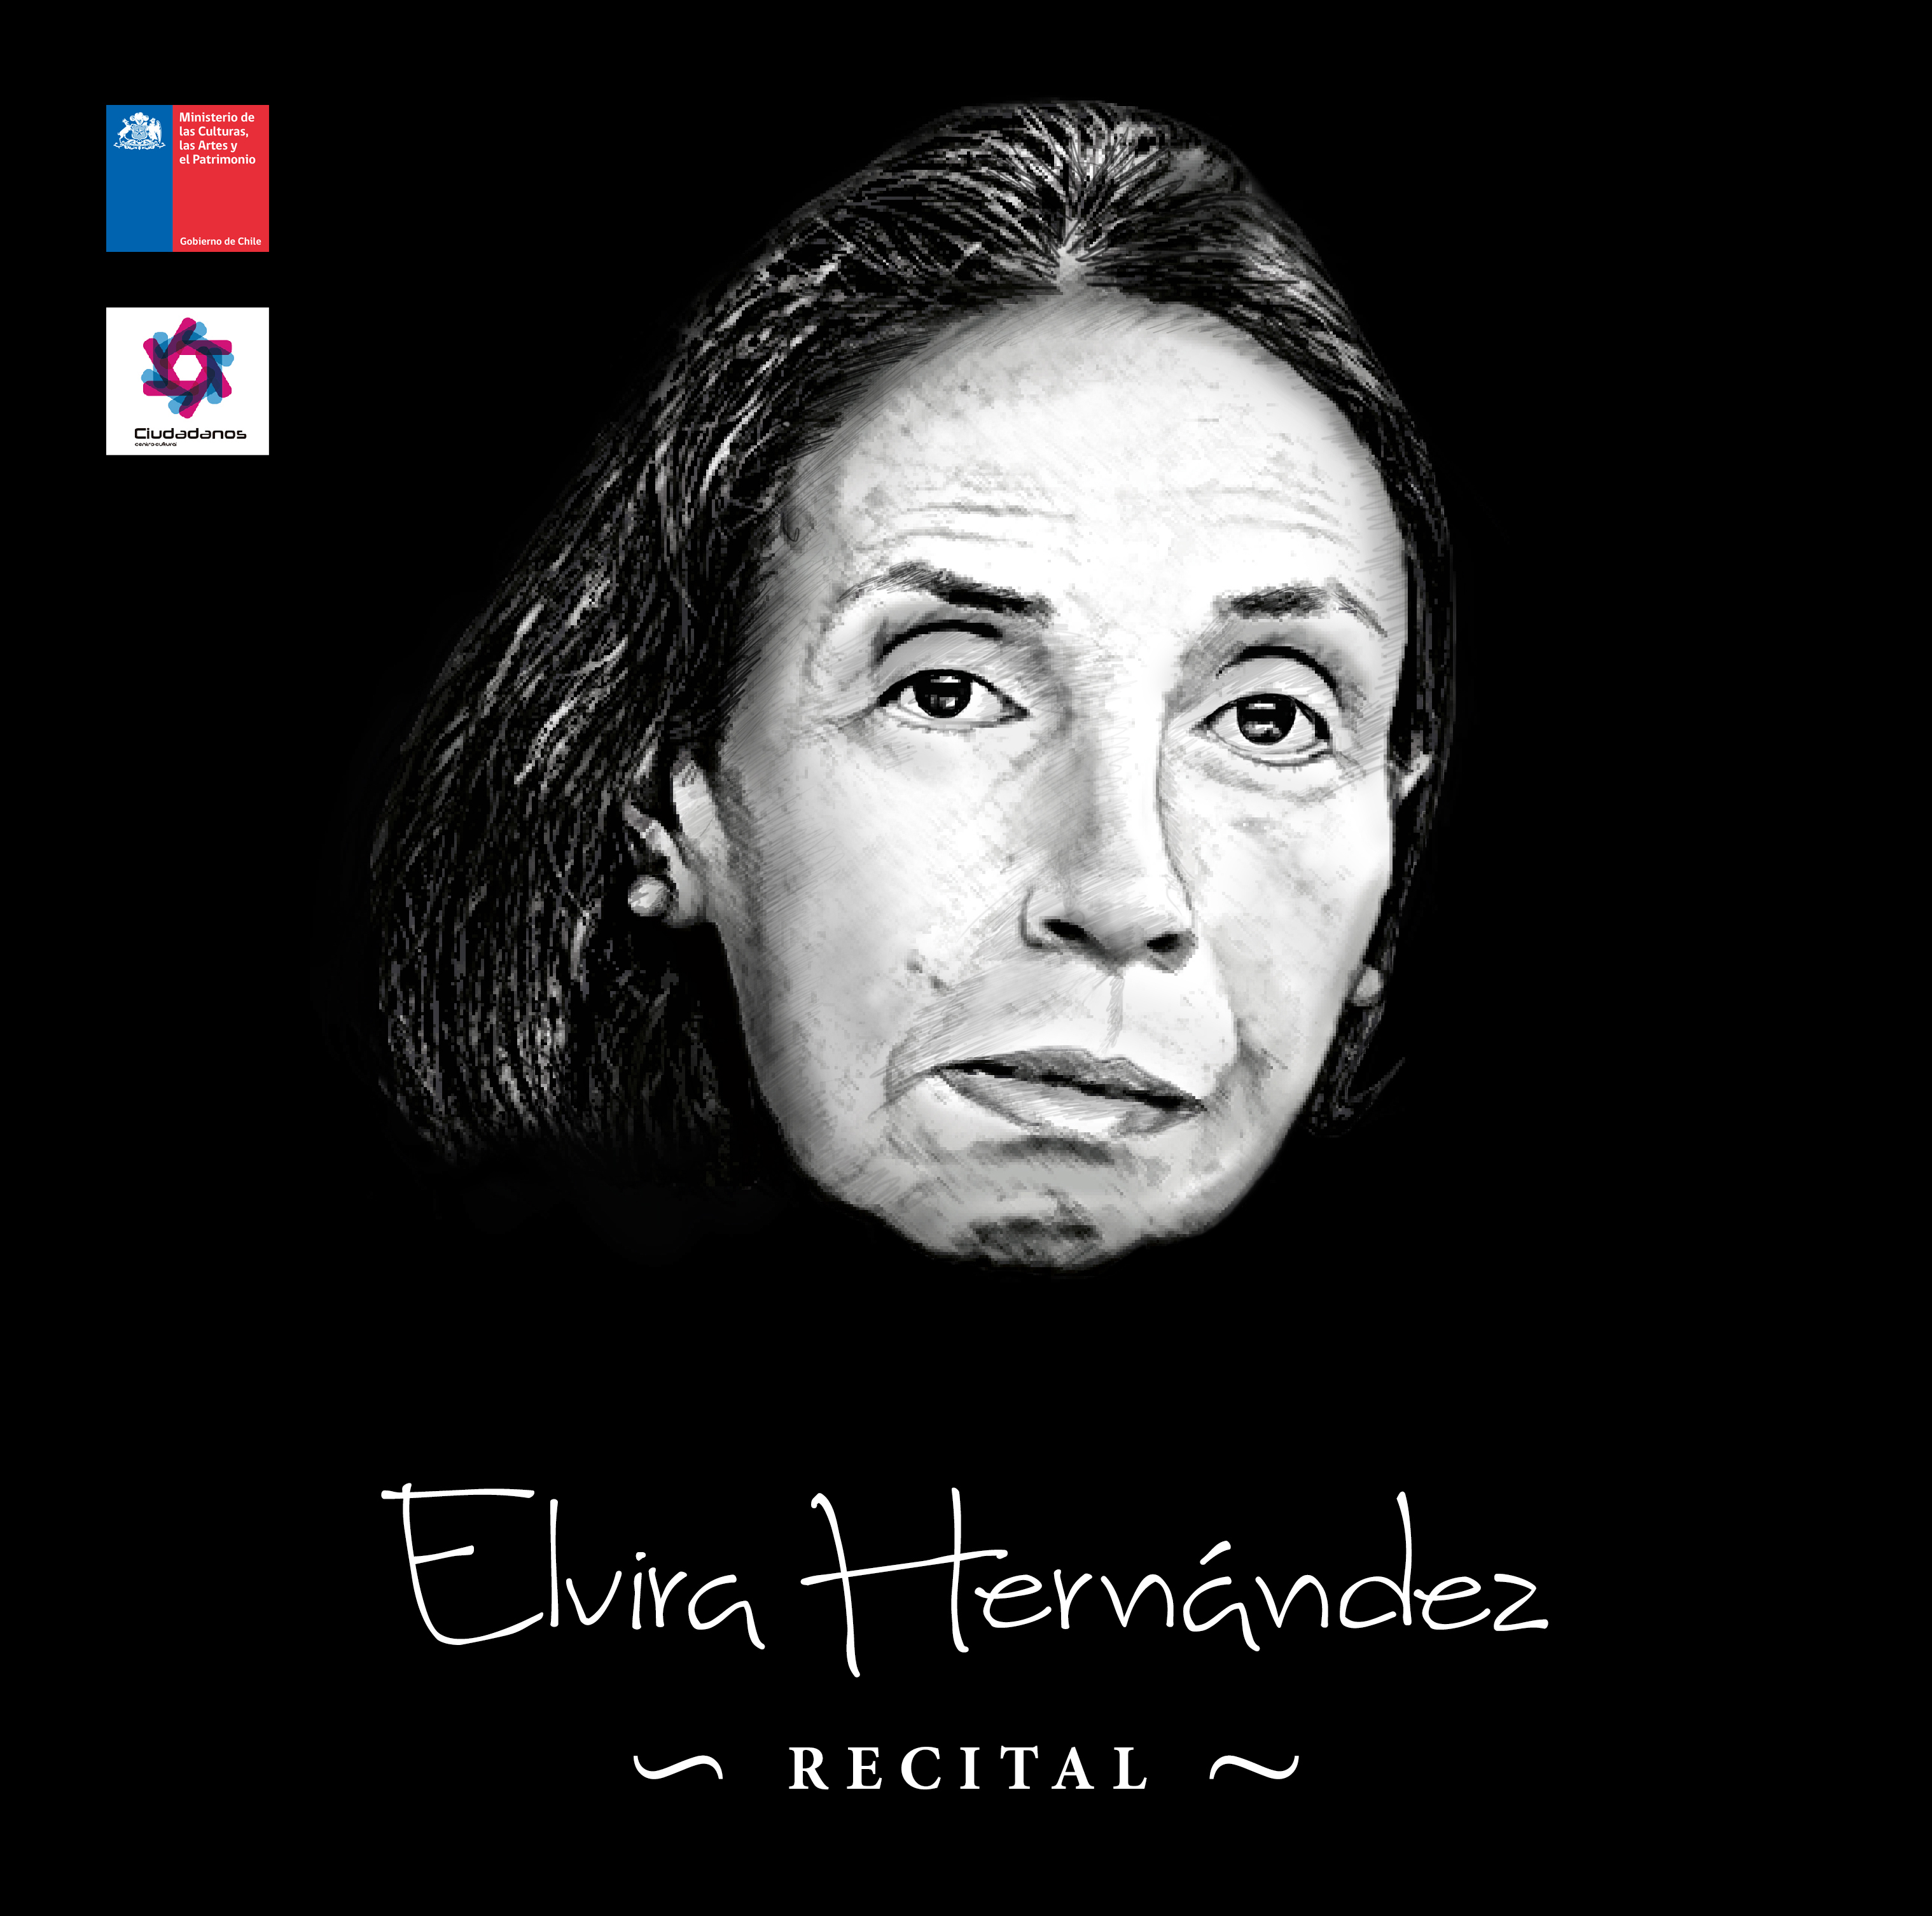 Elvira Hernández